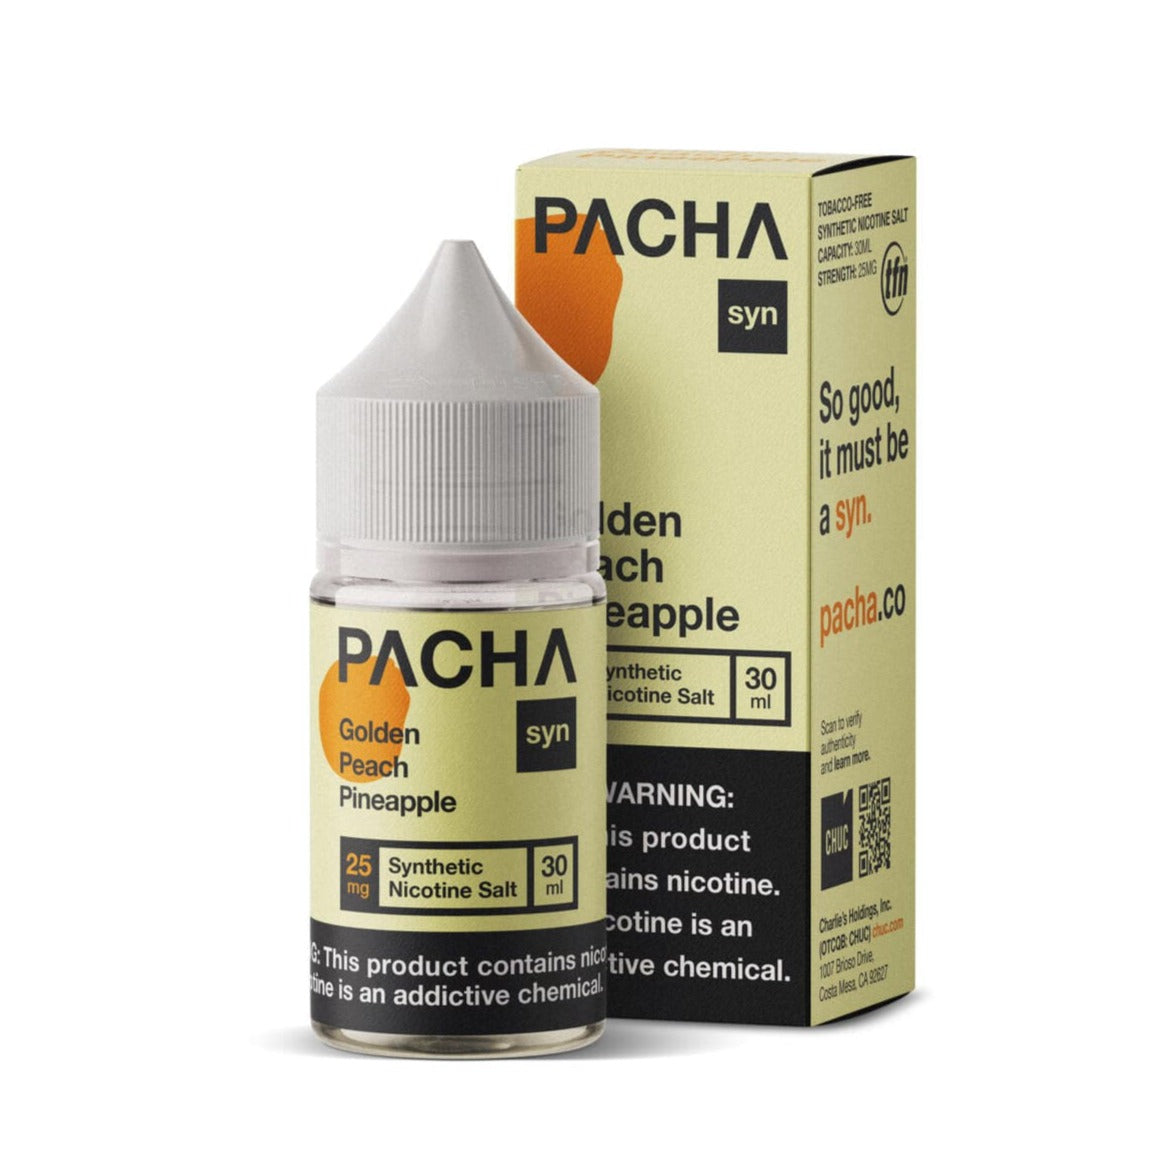 Pachamama Juice PACHA syn Golden Peach Pineapple 30ml Nic Salt Vape Juice - Pachamama